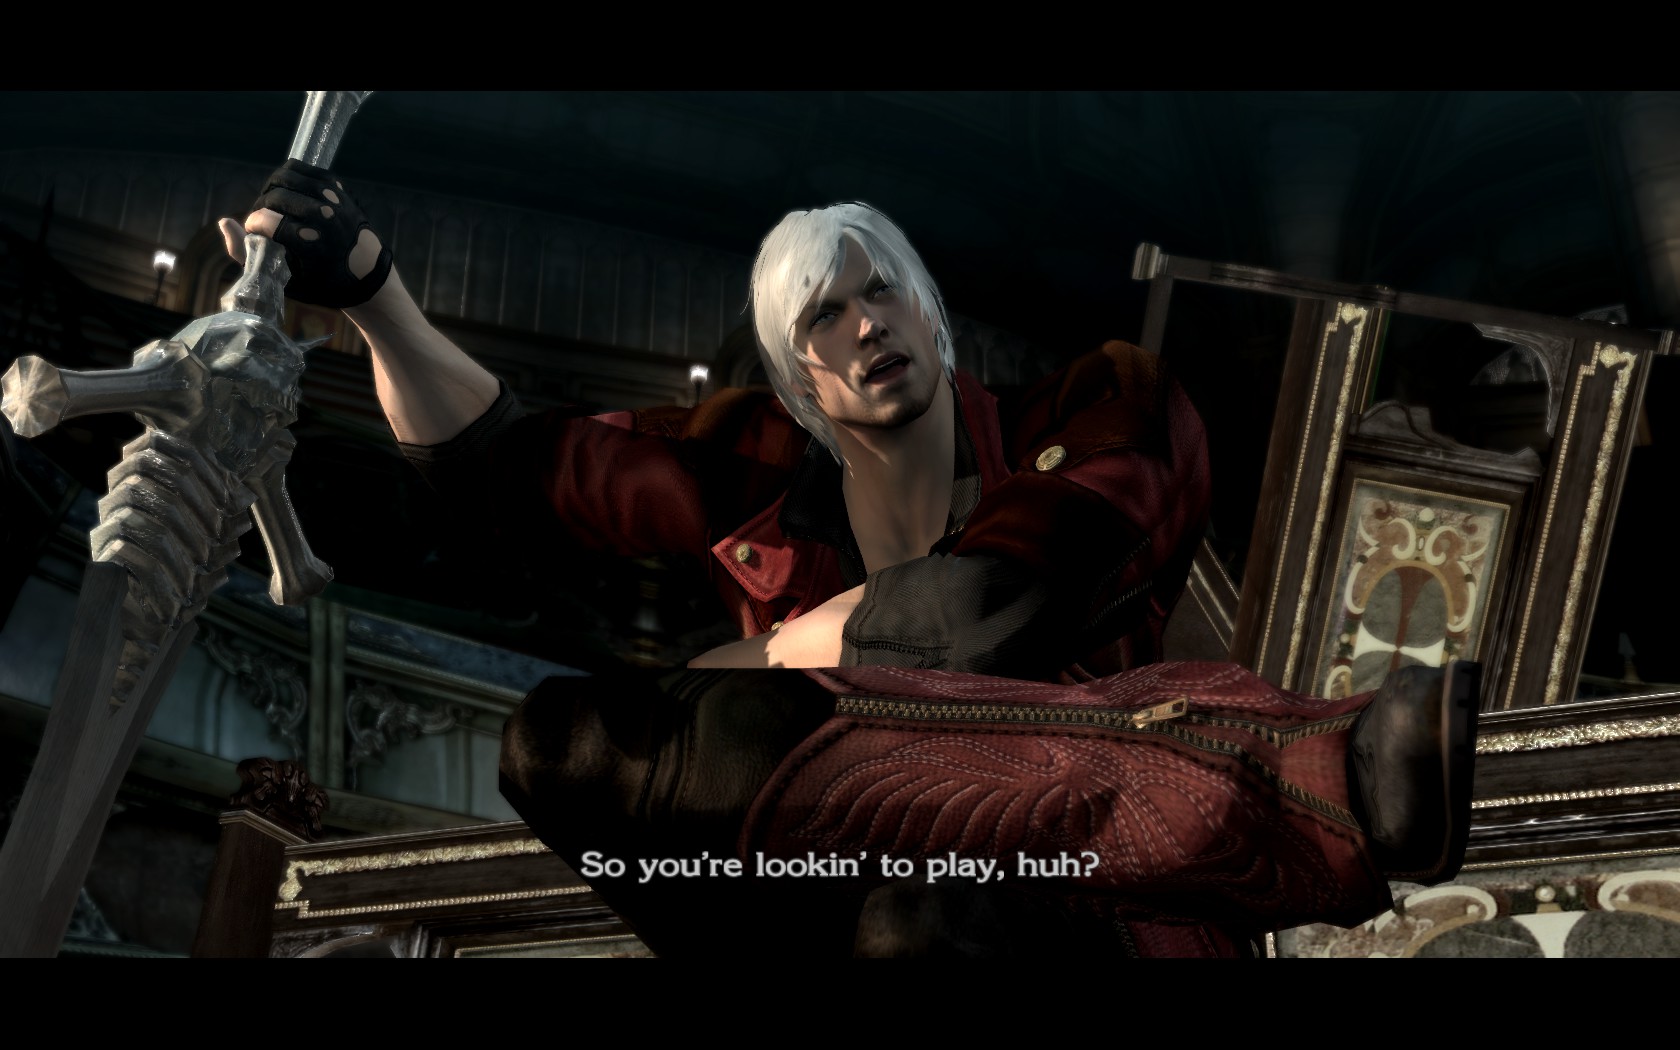 How I feel in my first mission as Dante in DMC 4 against enemies